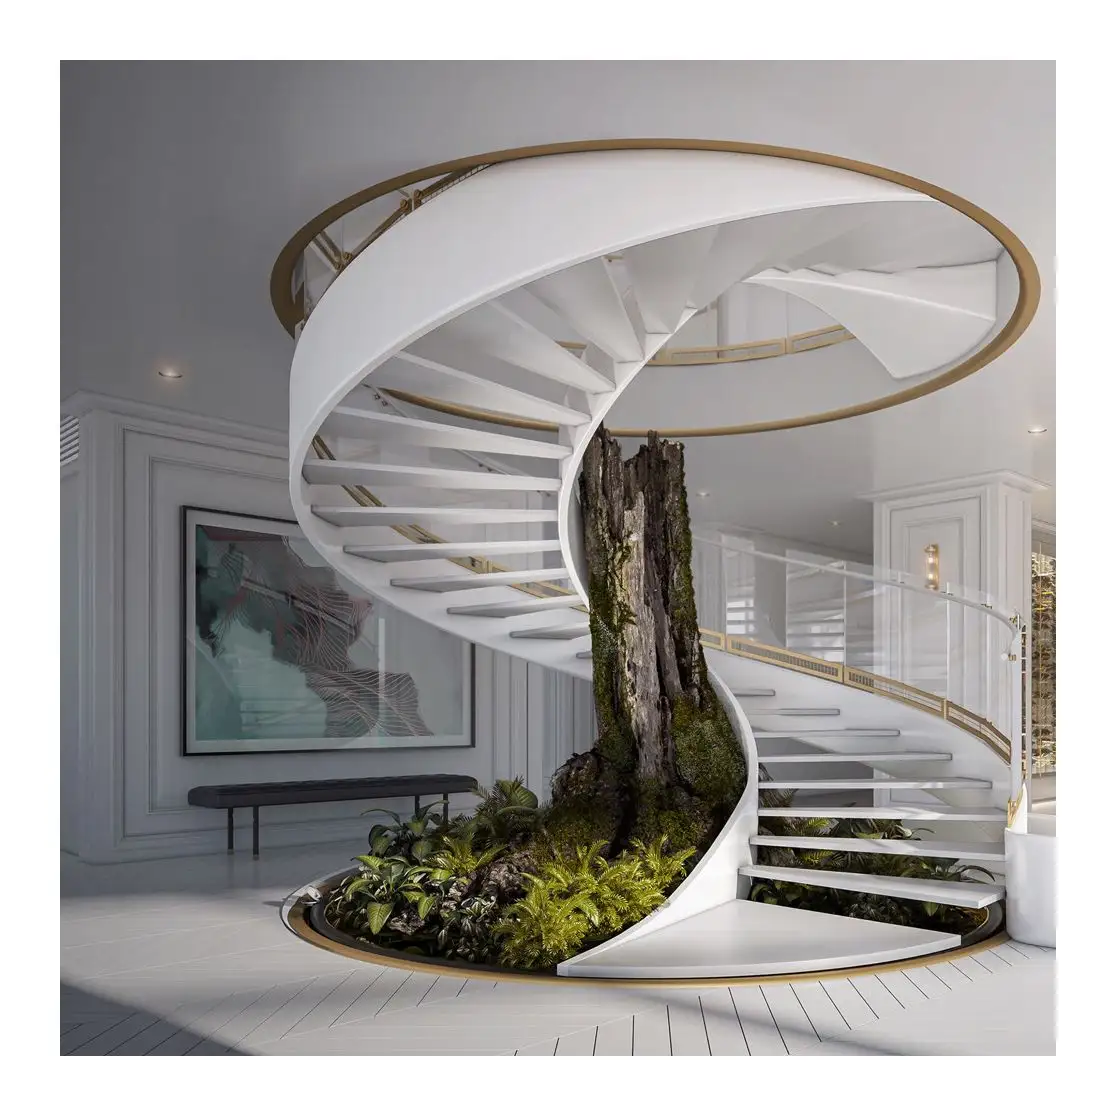 CBMmart fabrika kaynağı merdiven ahşap ayağı tasarımları spiral merdiven kapalı demir ahşap merdiven